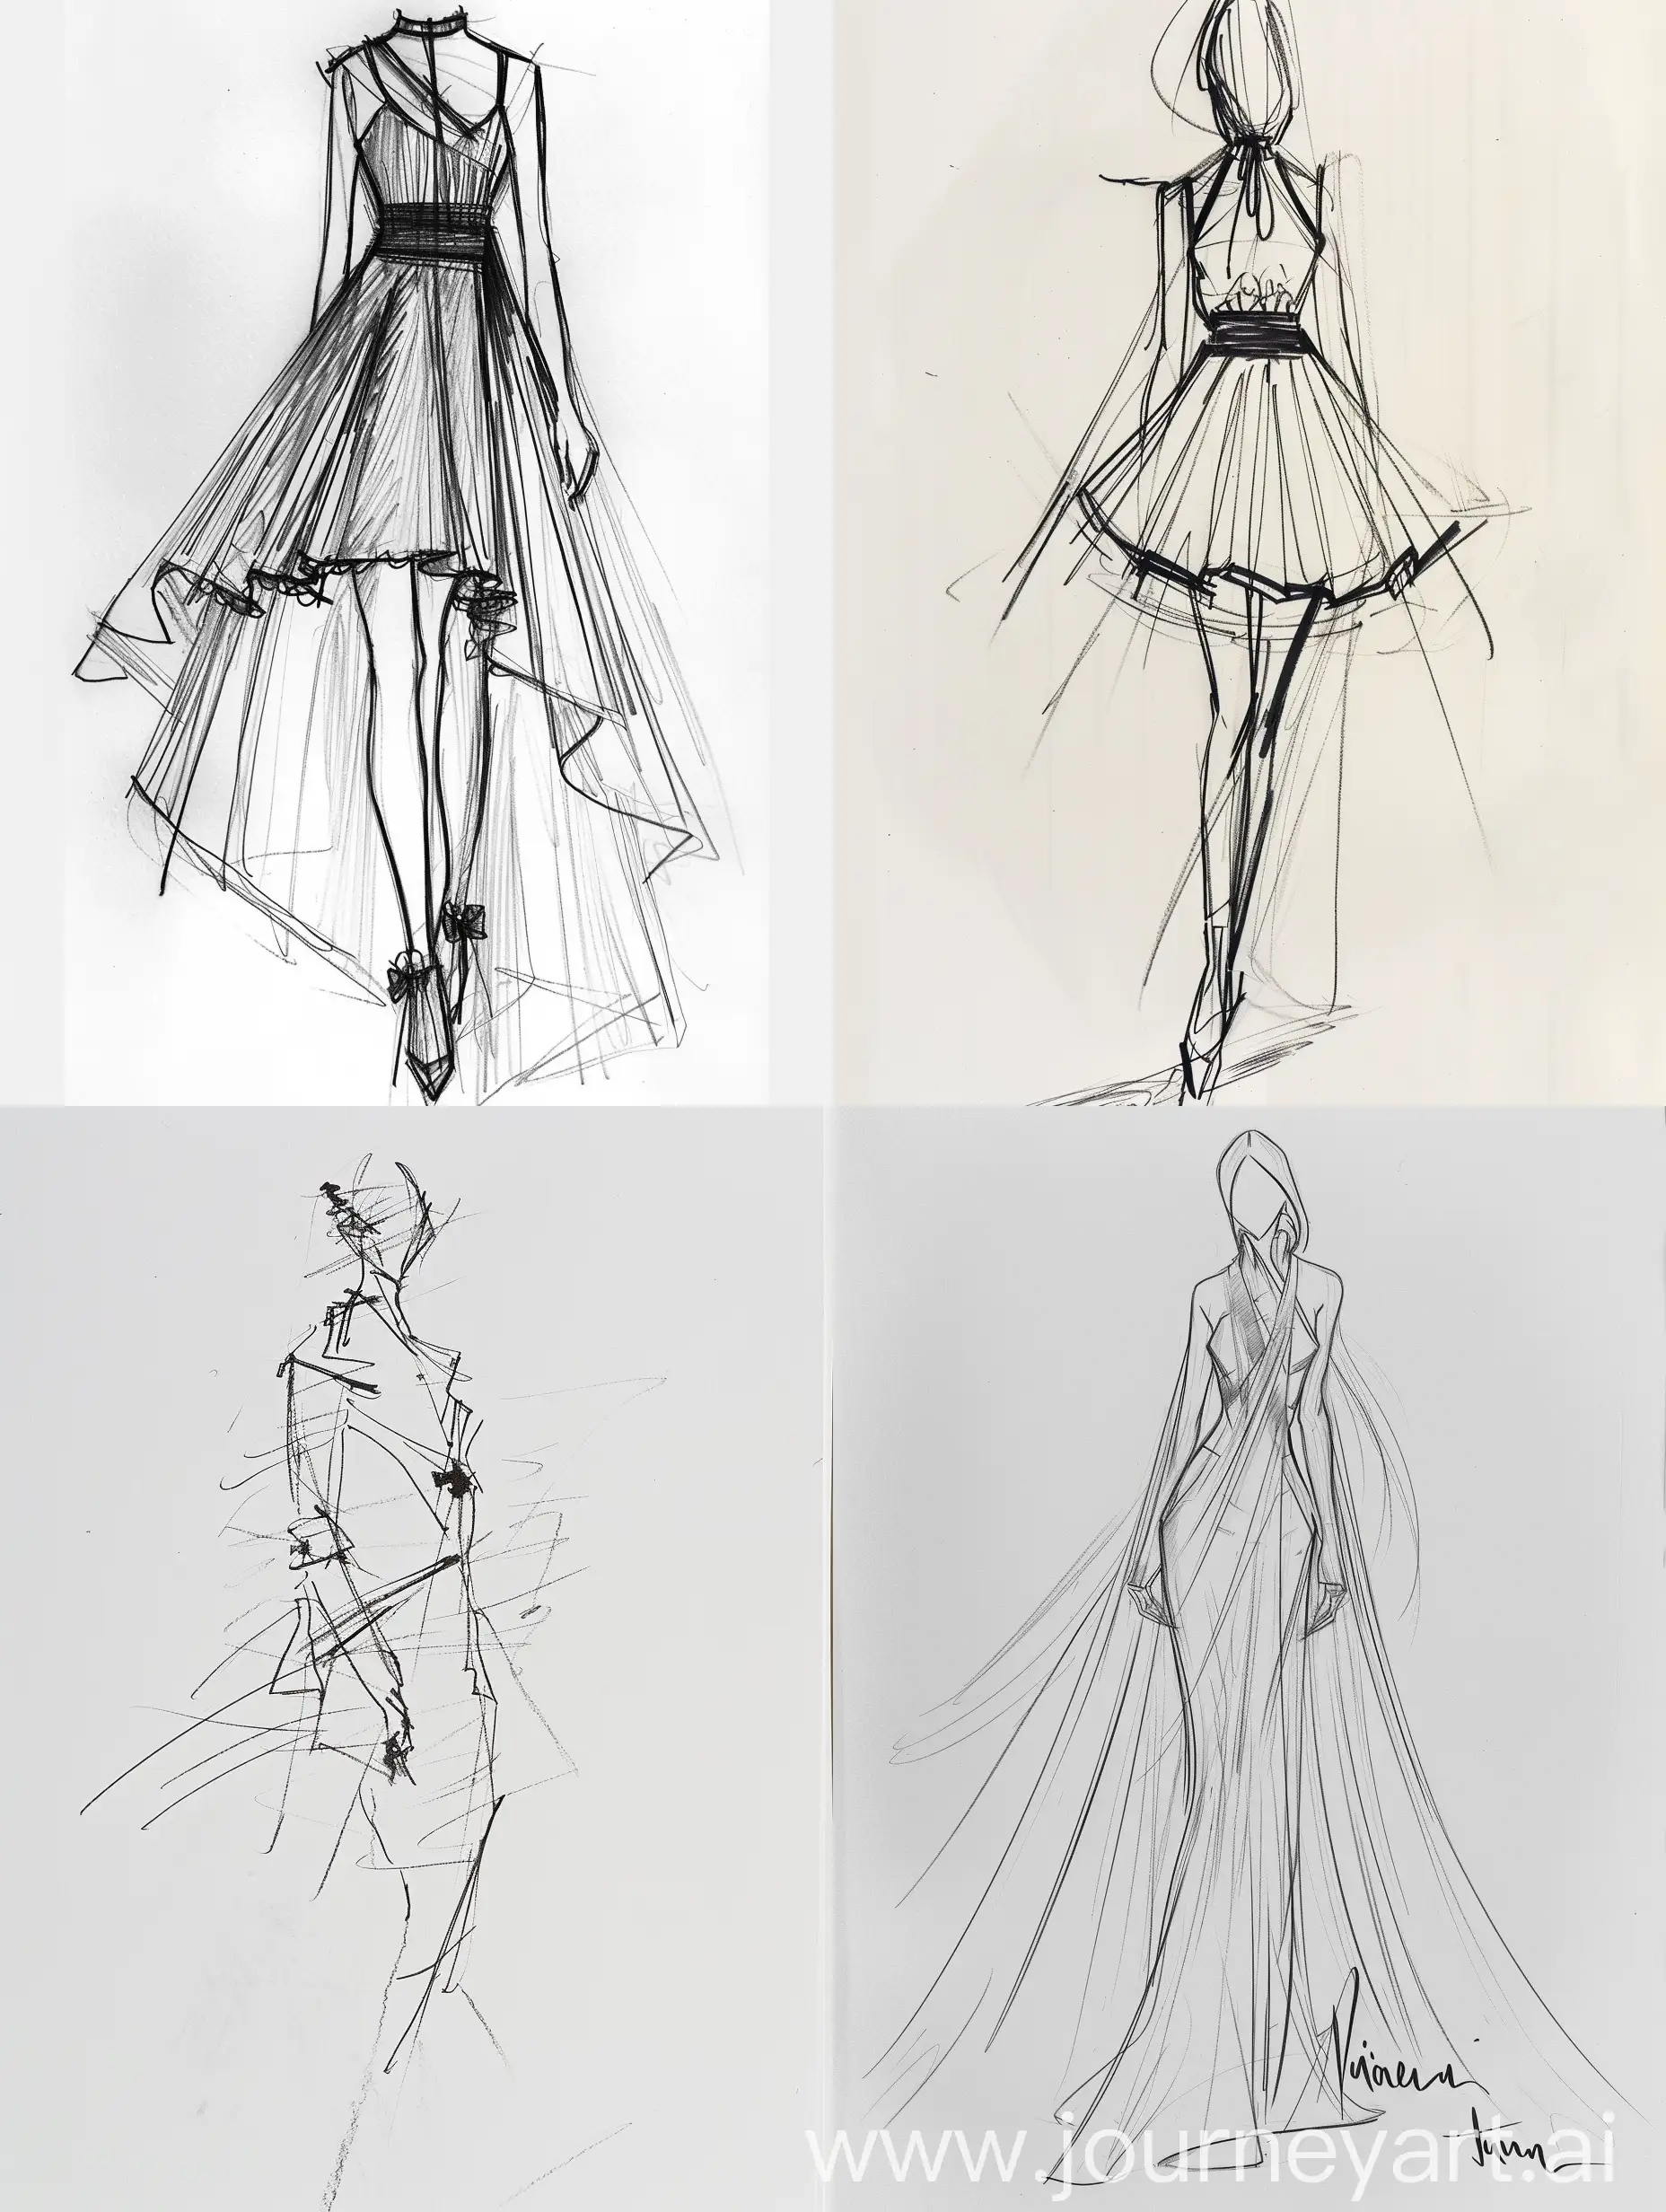 minimalist fashion sketch, style of Joseph auren

